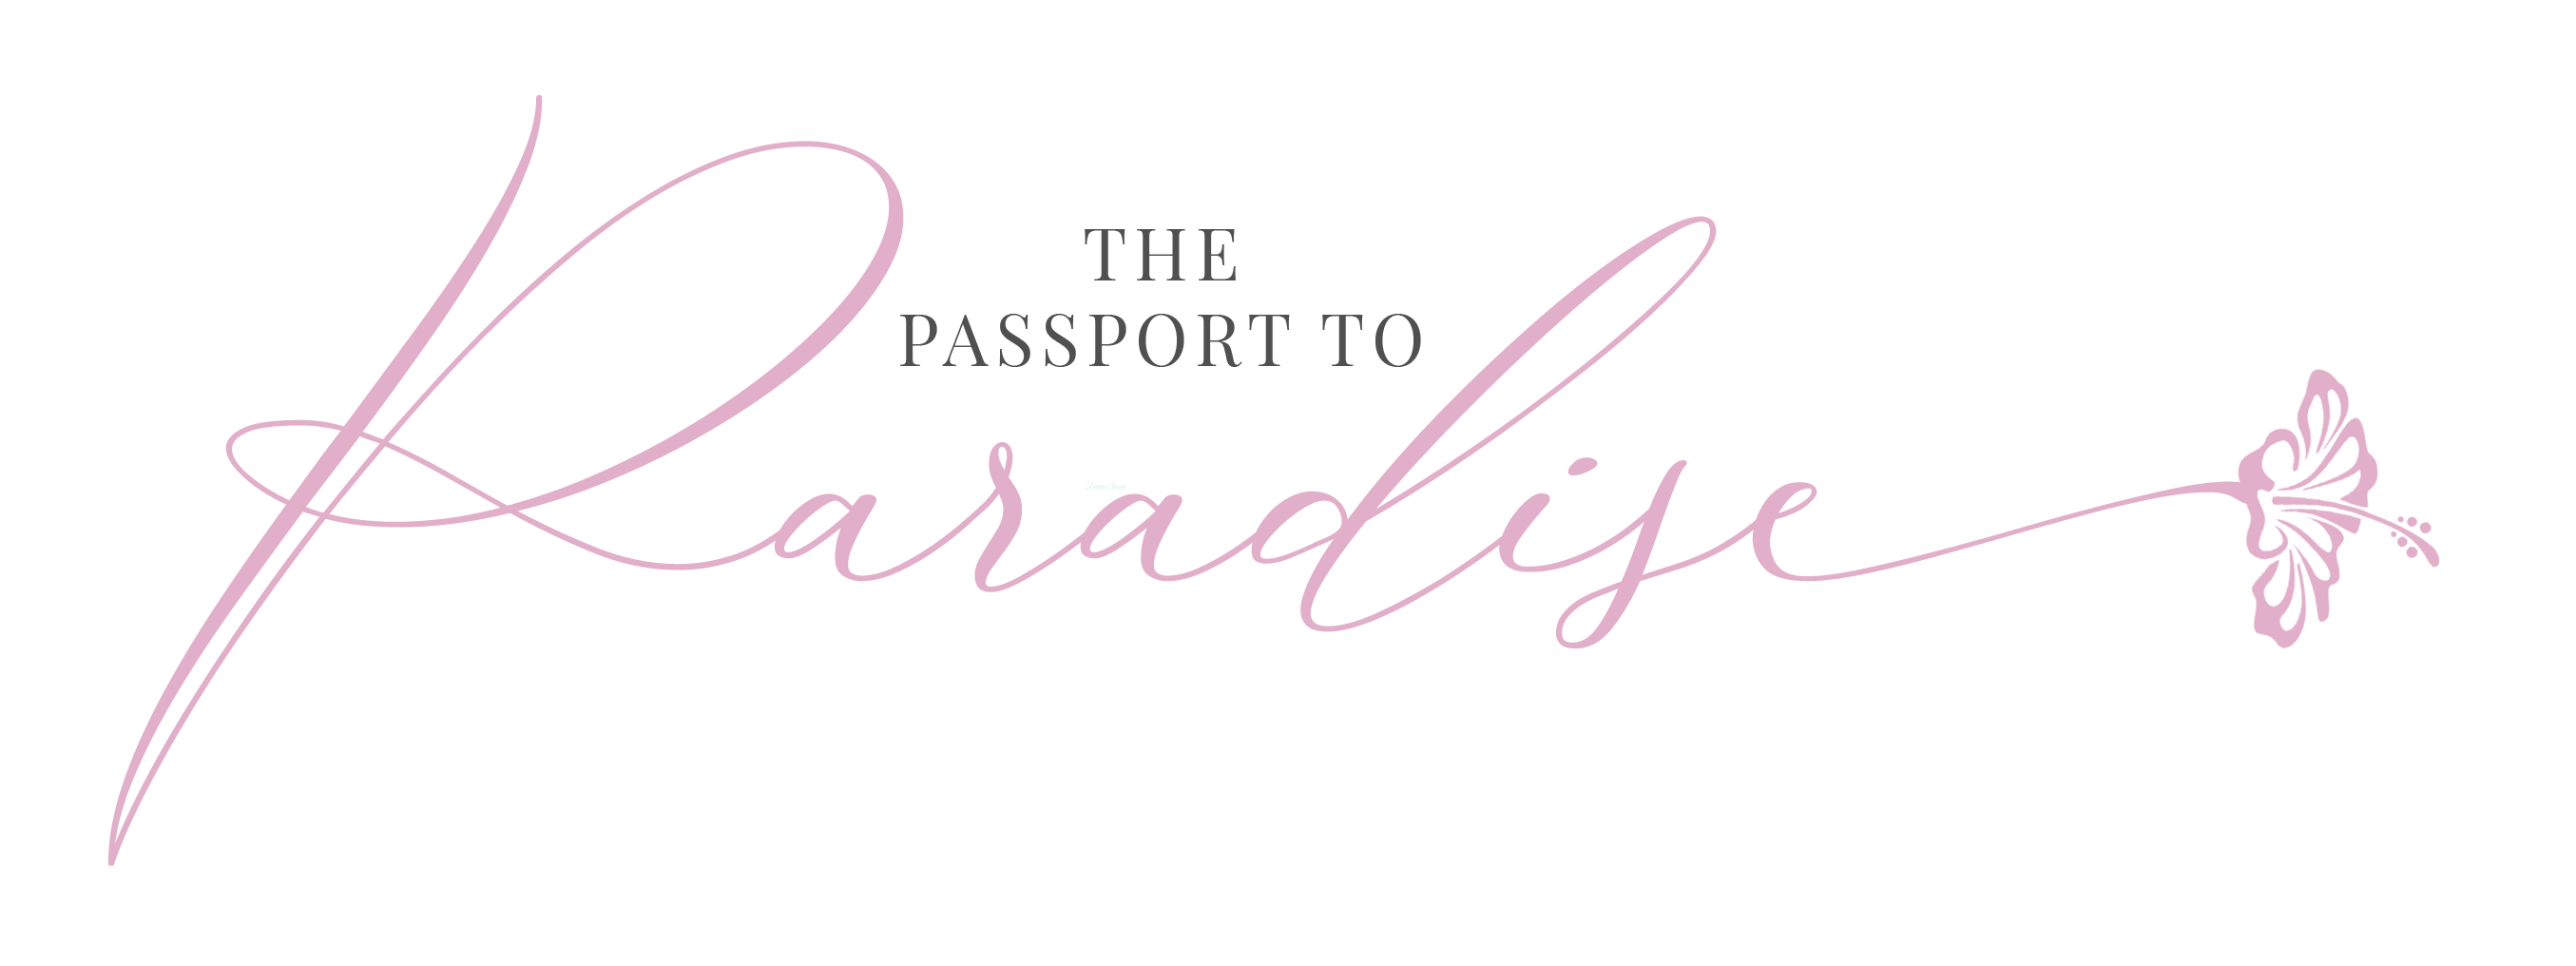 The Passport to Paradise